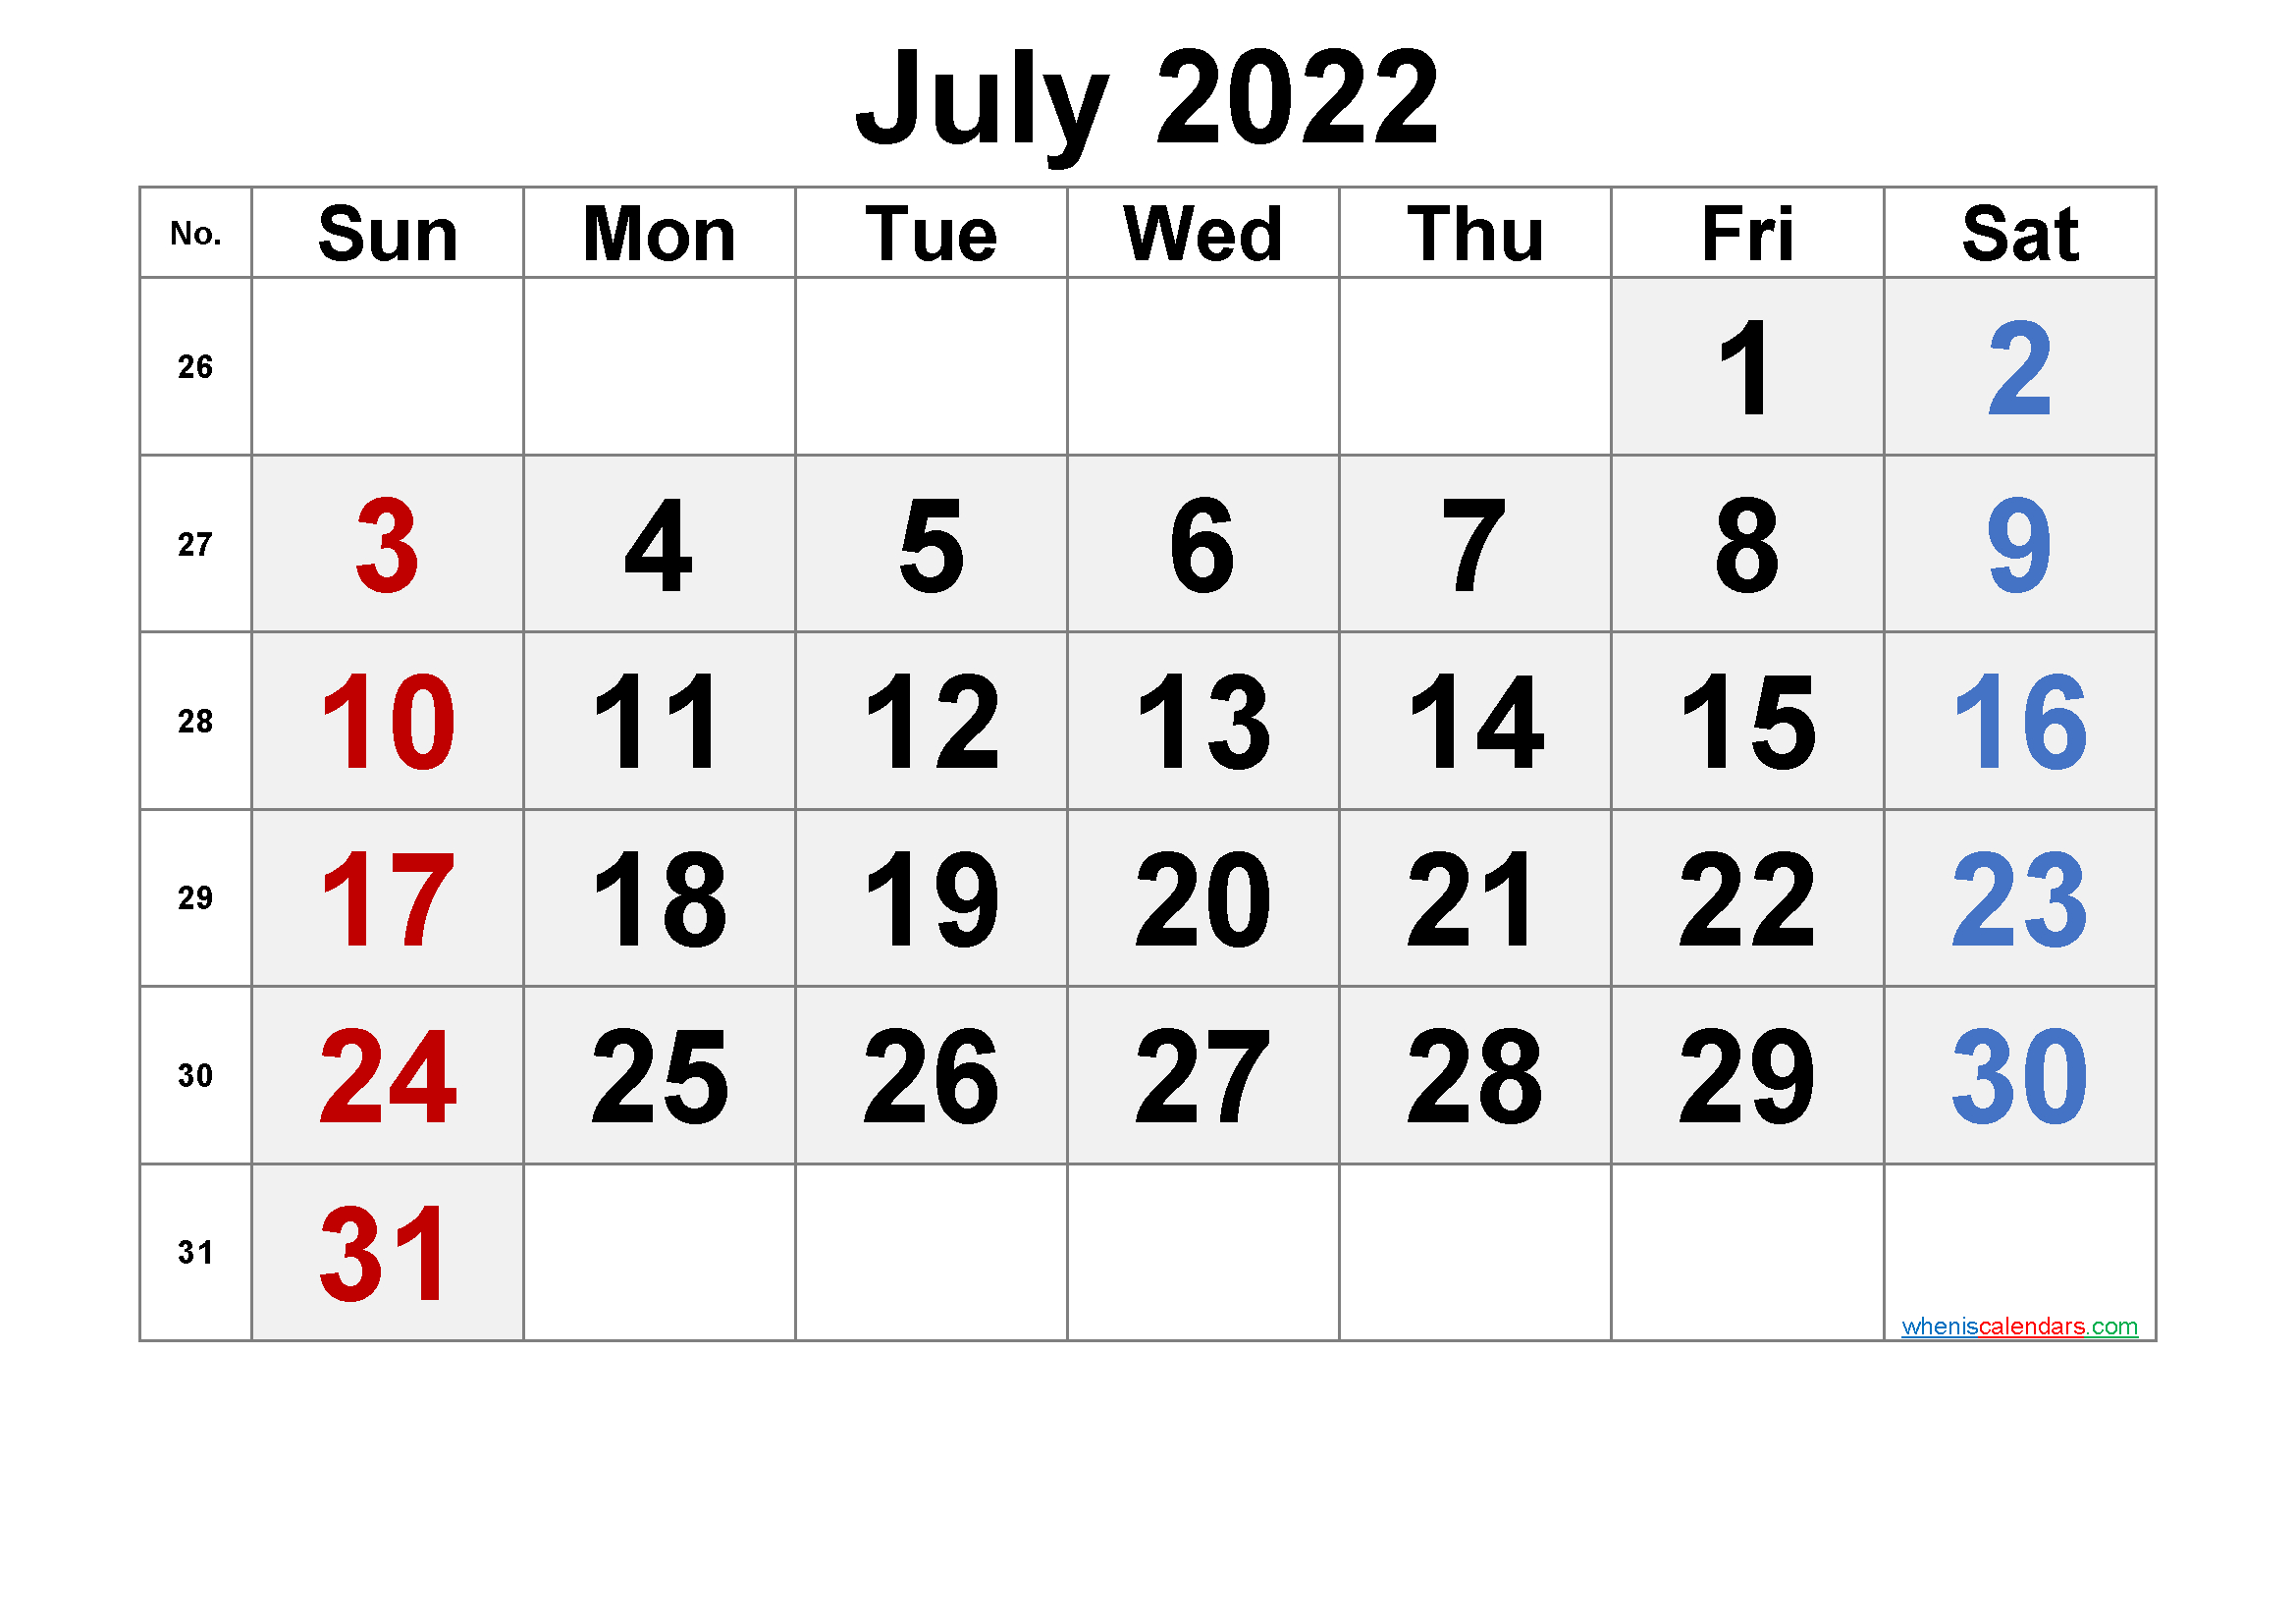 Take Calendar 2022 July Month